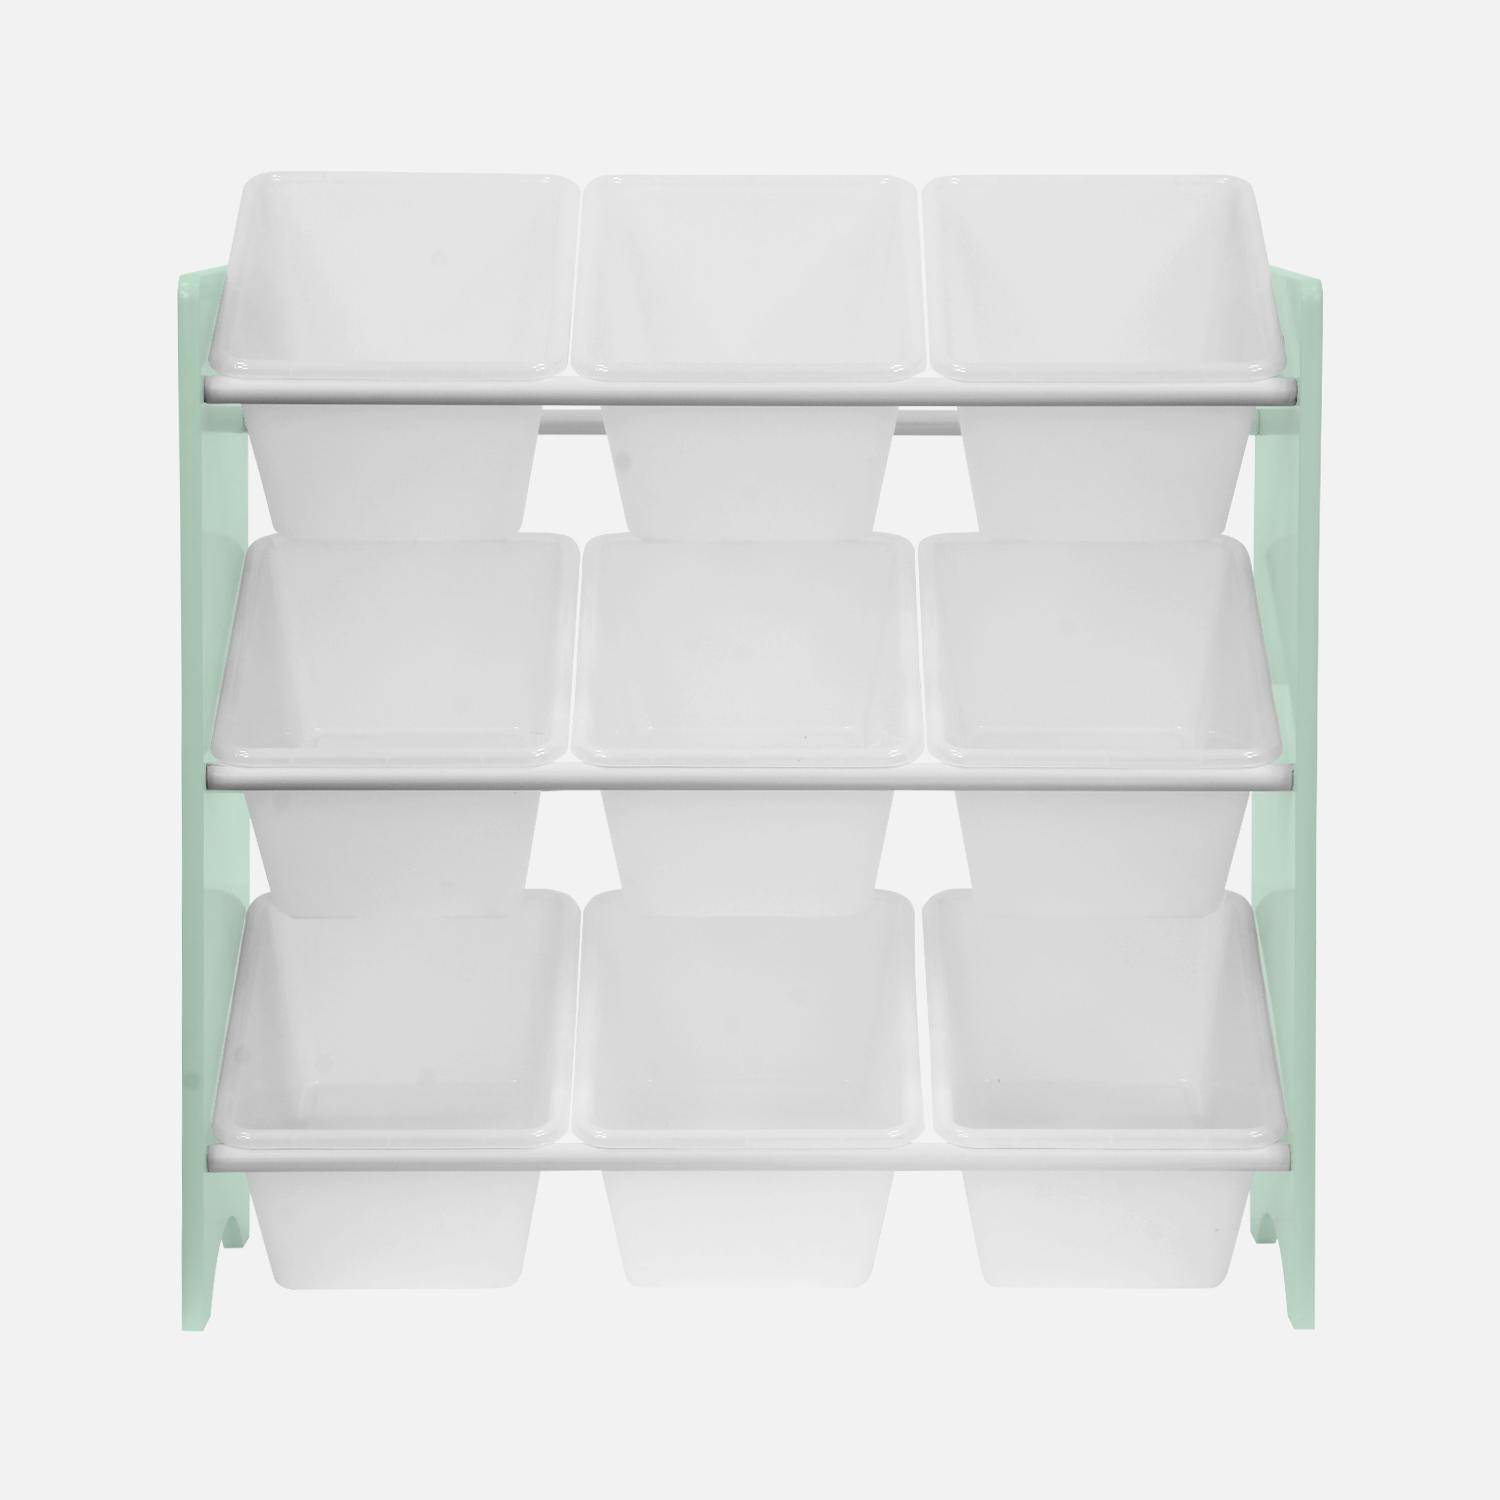 Storage unit for children with 9 compartments, celadon green - Tobias - MDF natural wood decor, 64x29.5x60cm Photo4